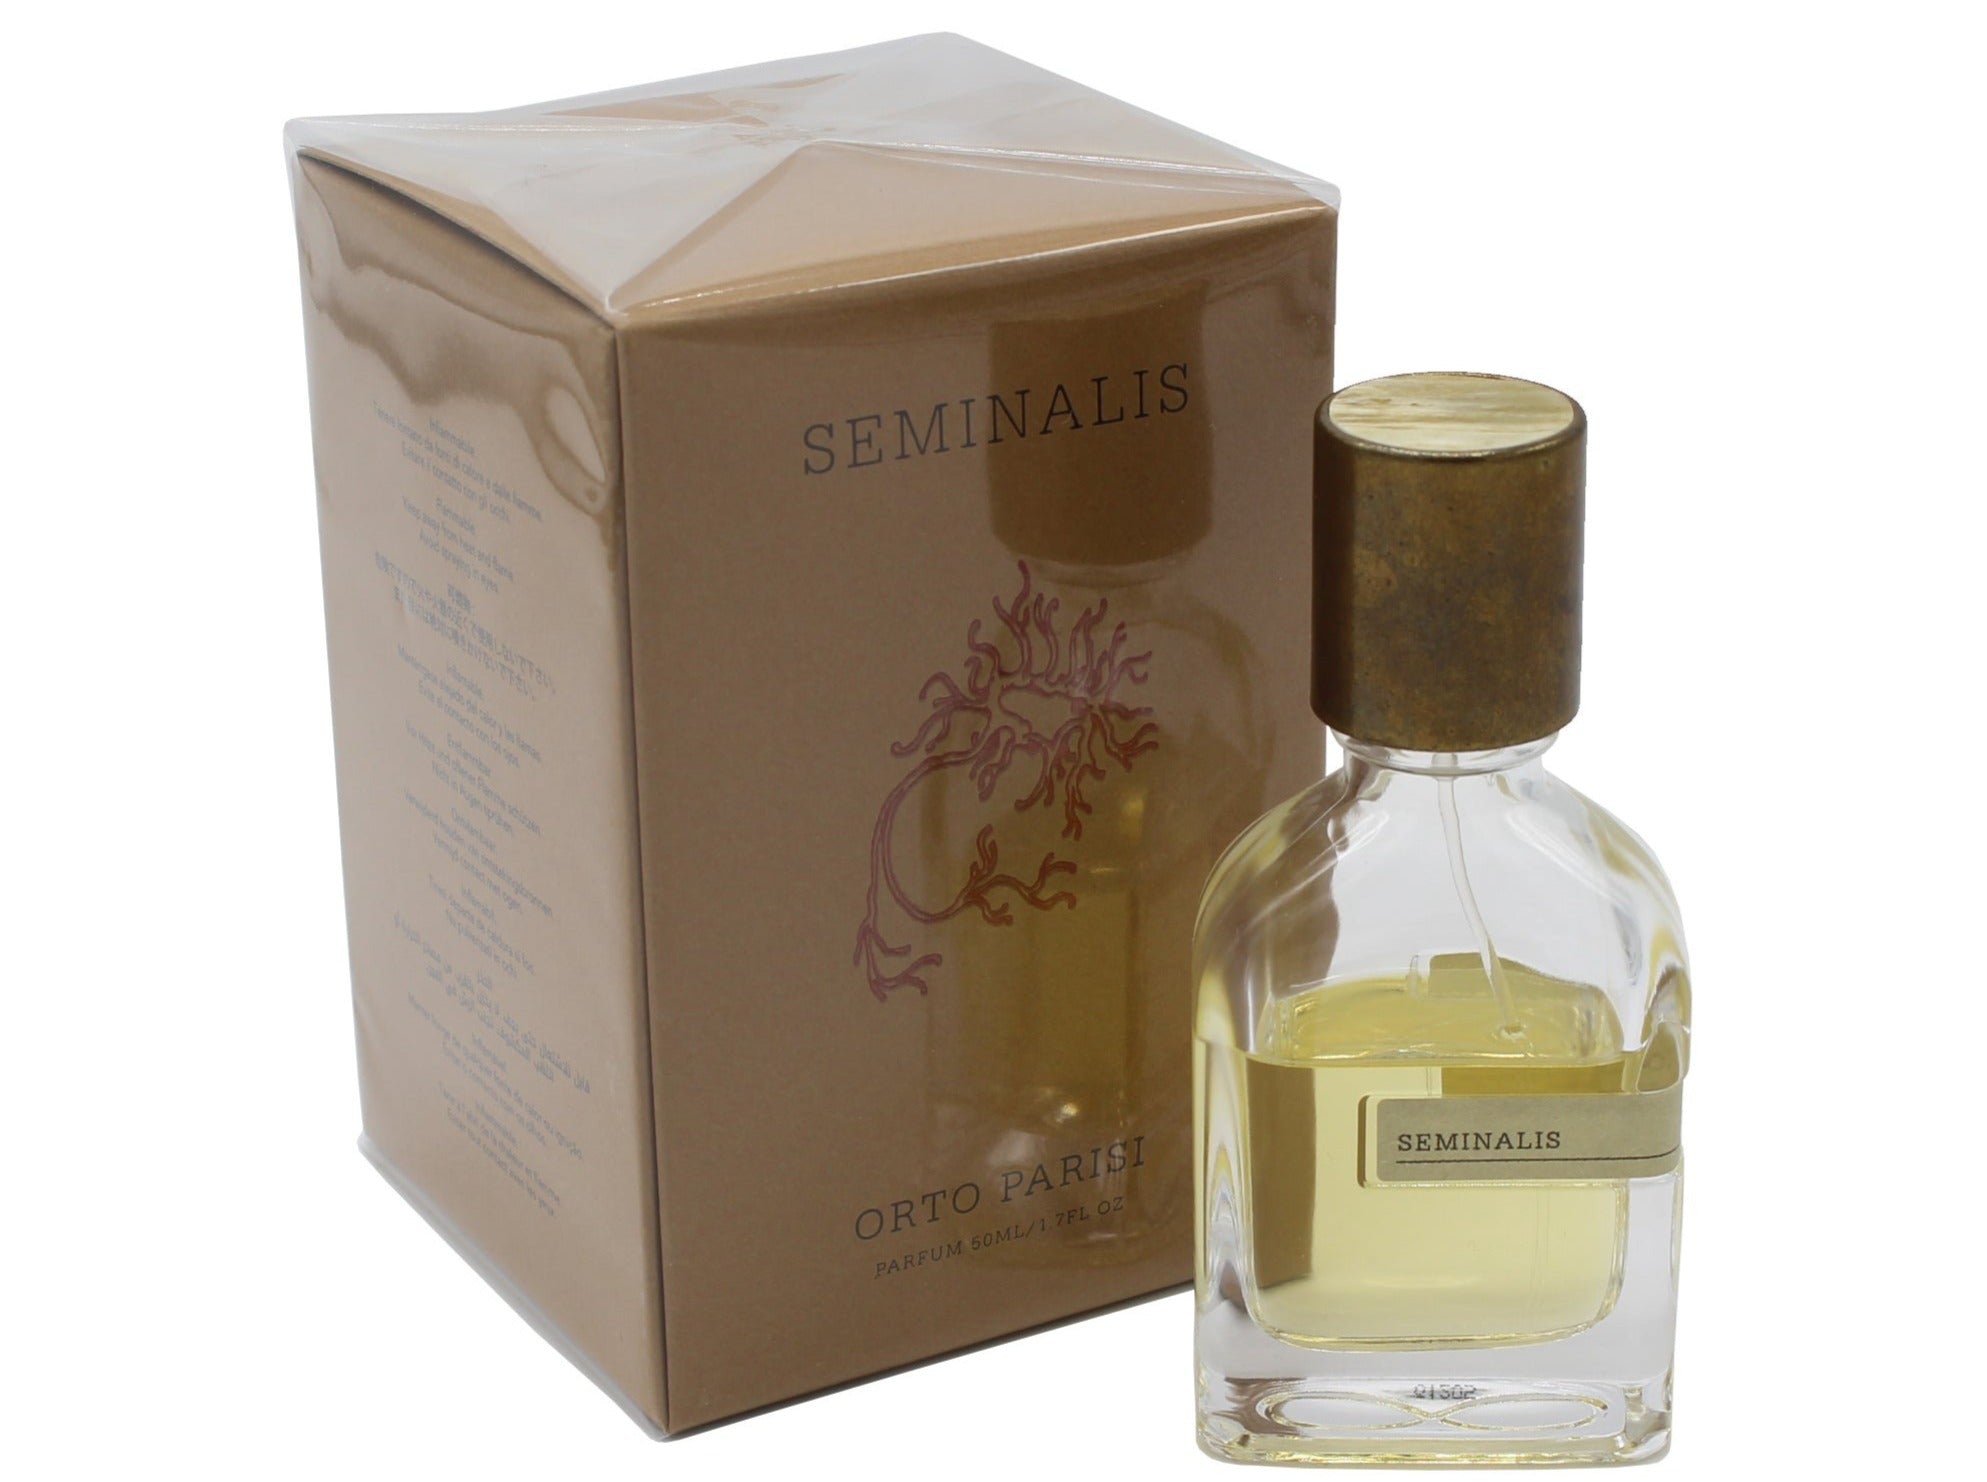 Seminalis perfume